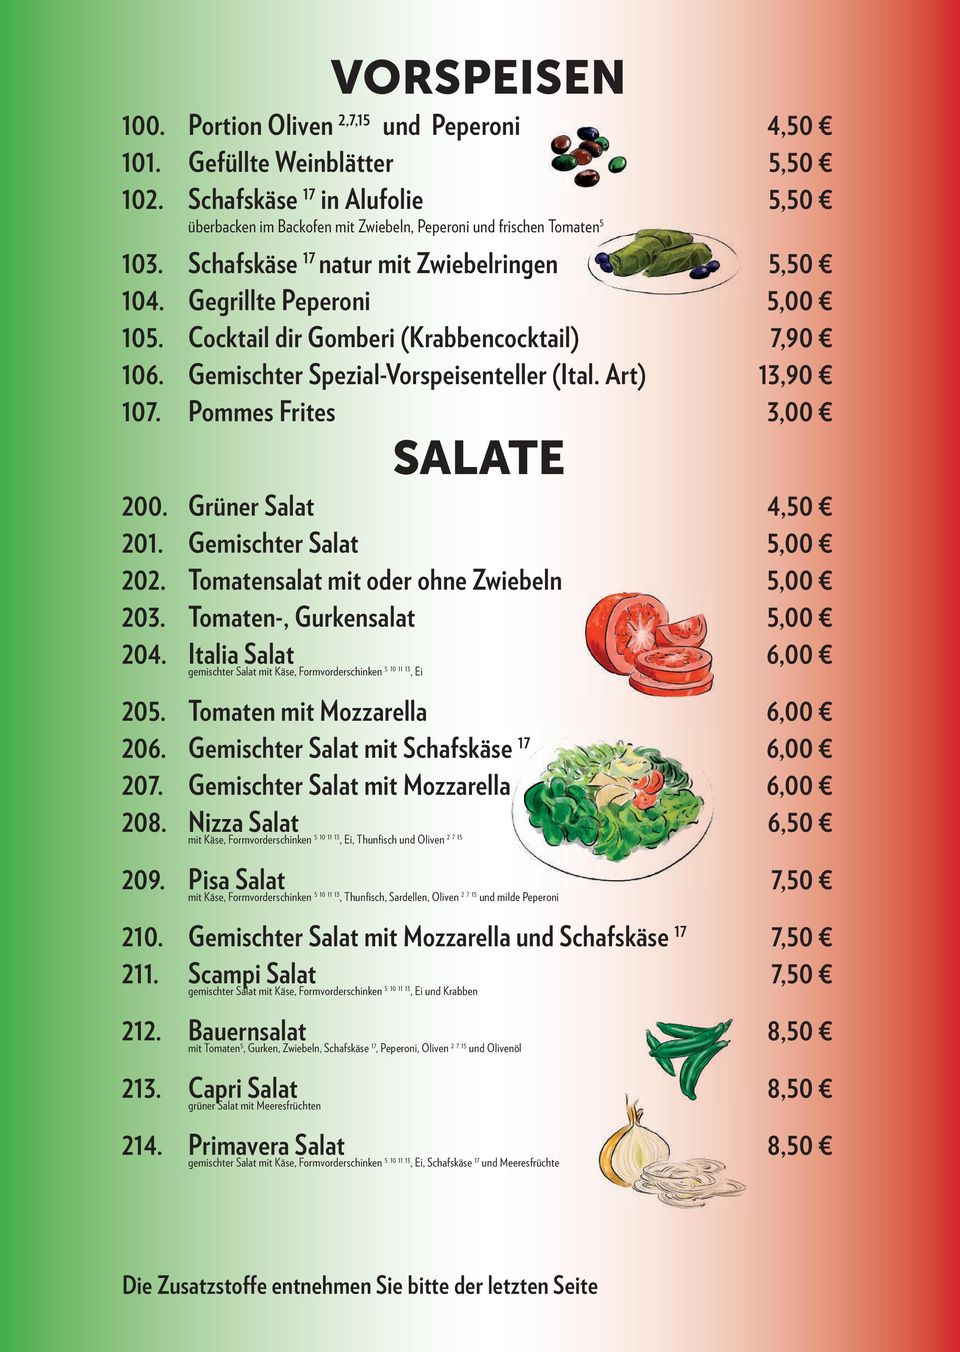 Pommes frites 3,00 SAlATe 200. grüner salat 4,50 201. gemischter salat 5,00 202. tomatensalat mit oder ohne Zwiebeln 5,00 203. tomaten-, gurkensalat 5,00 204.